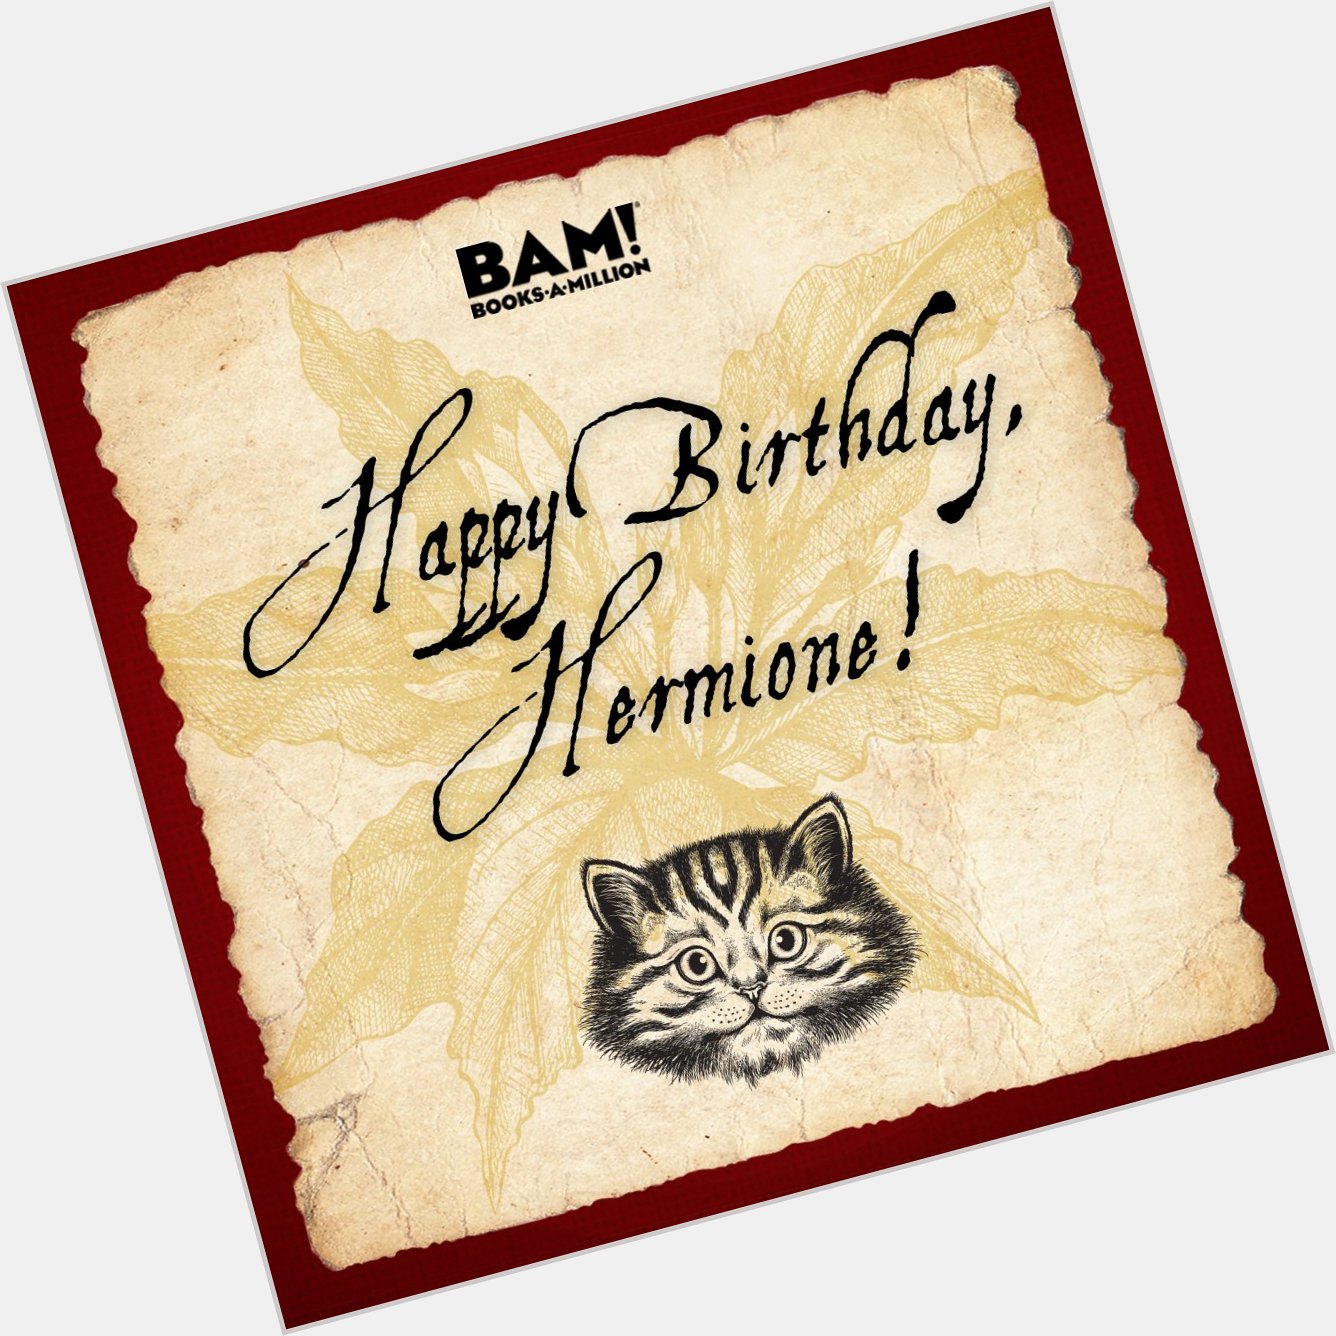 Happy birthday Hermione Granger!  